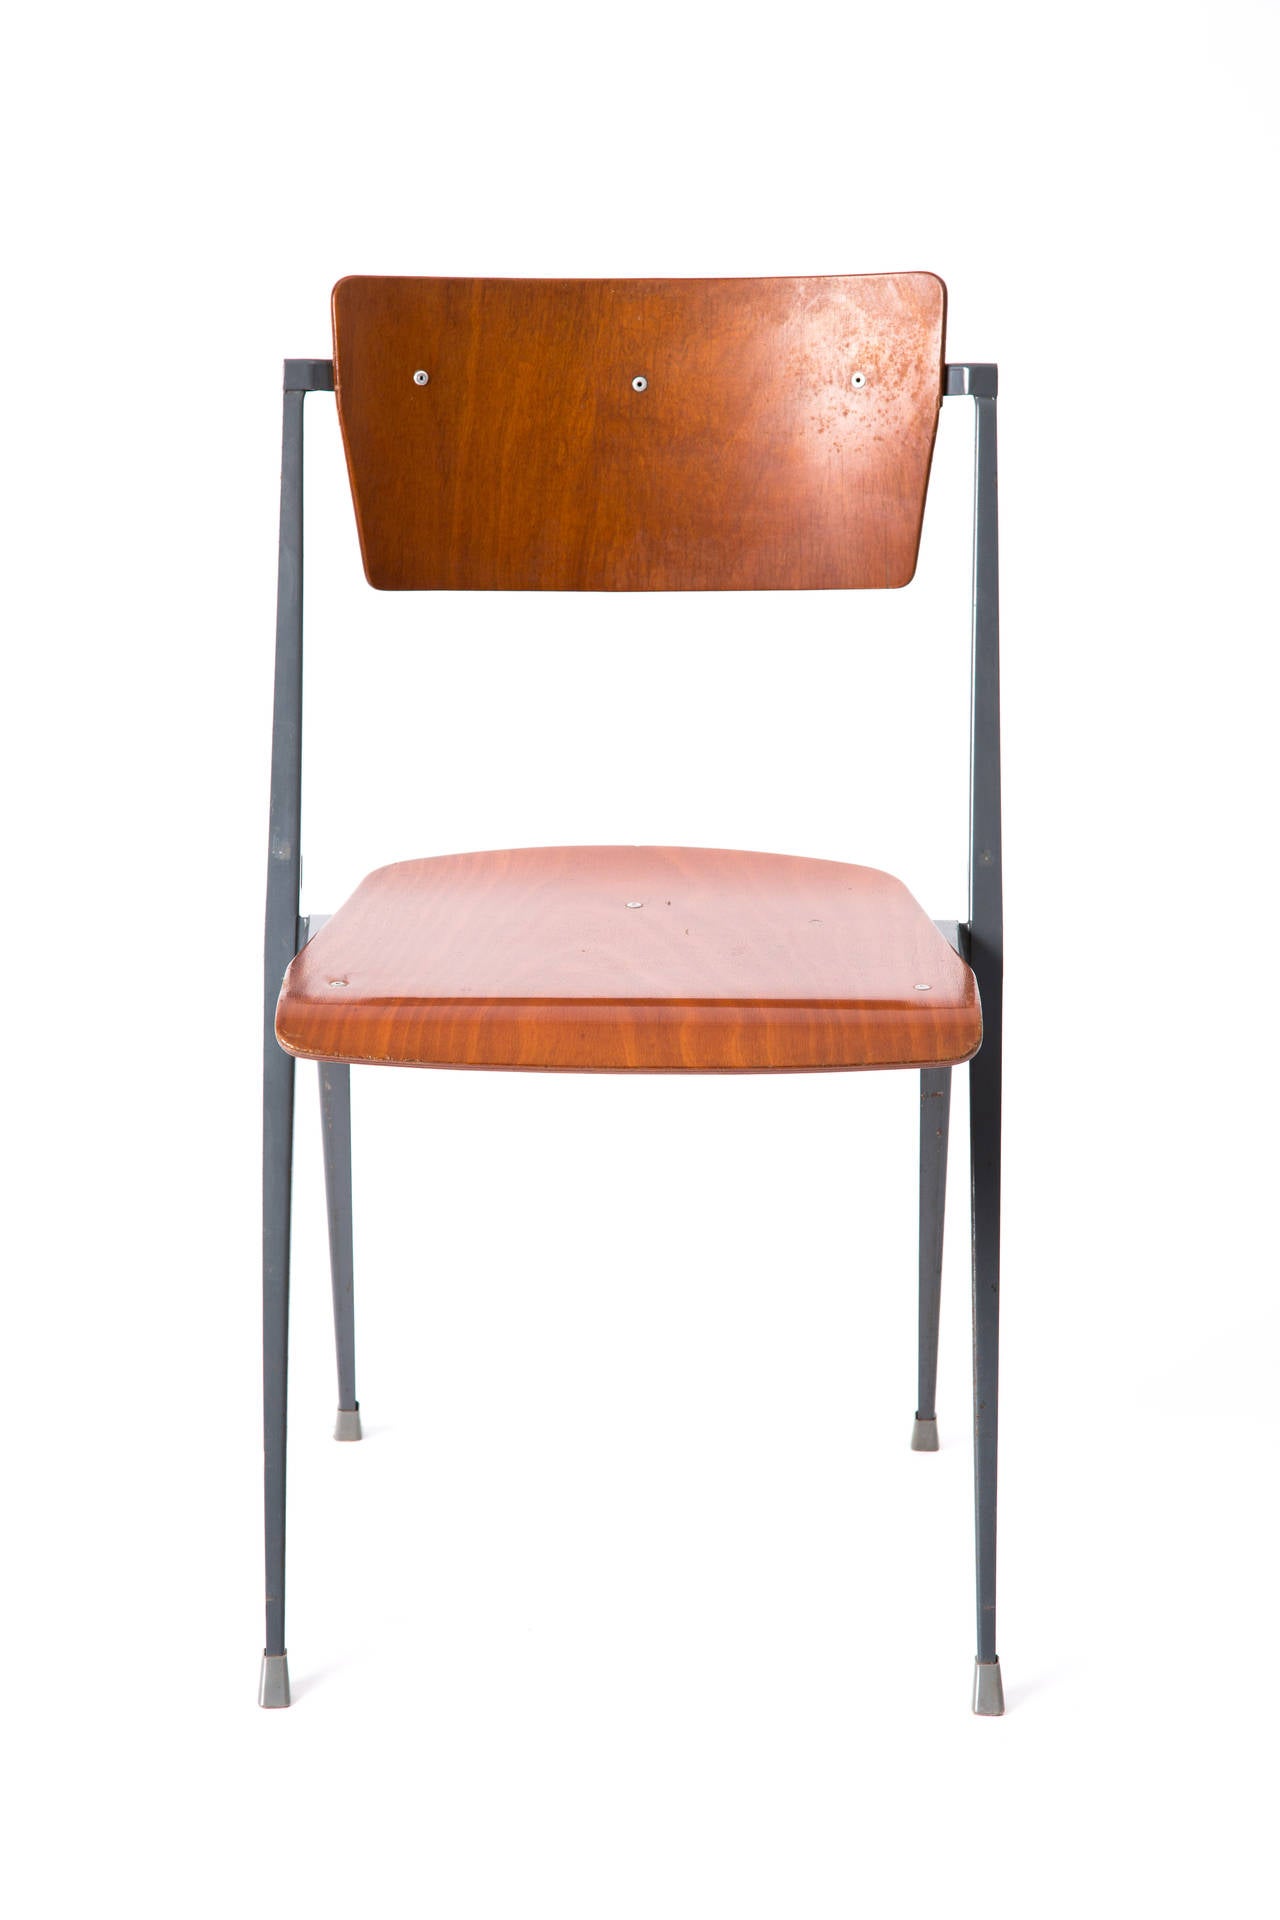 Wim Rietveld Pyramide Ahrend de Cirkel Chairs For Sale 1